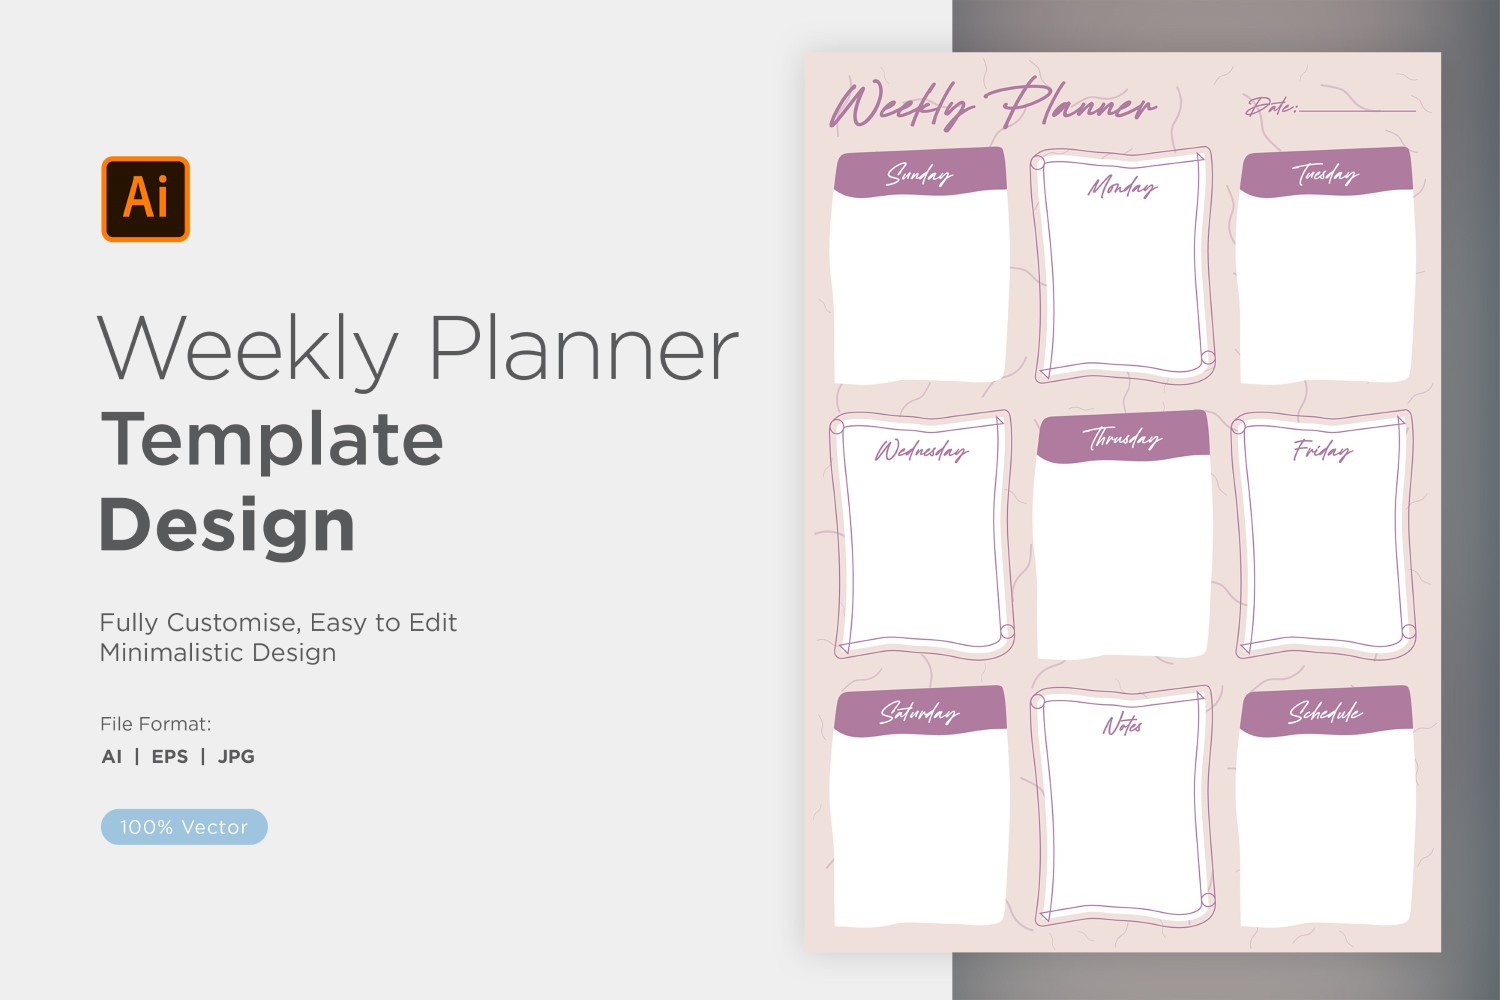 Weekly Planner Sheet Design - 25